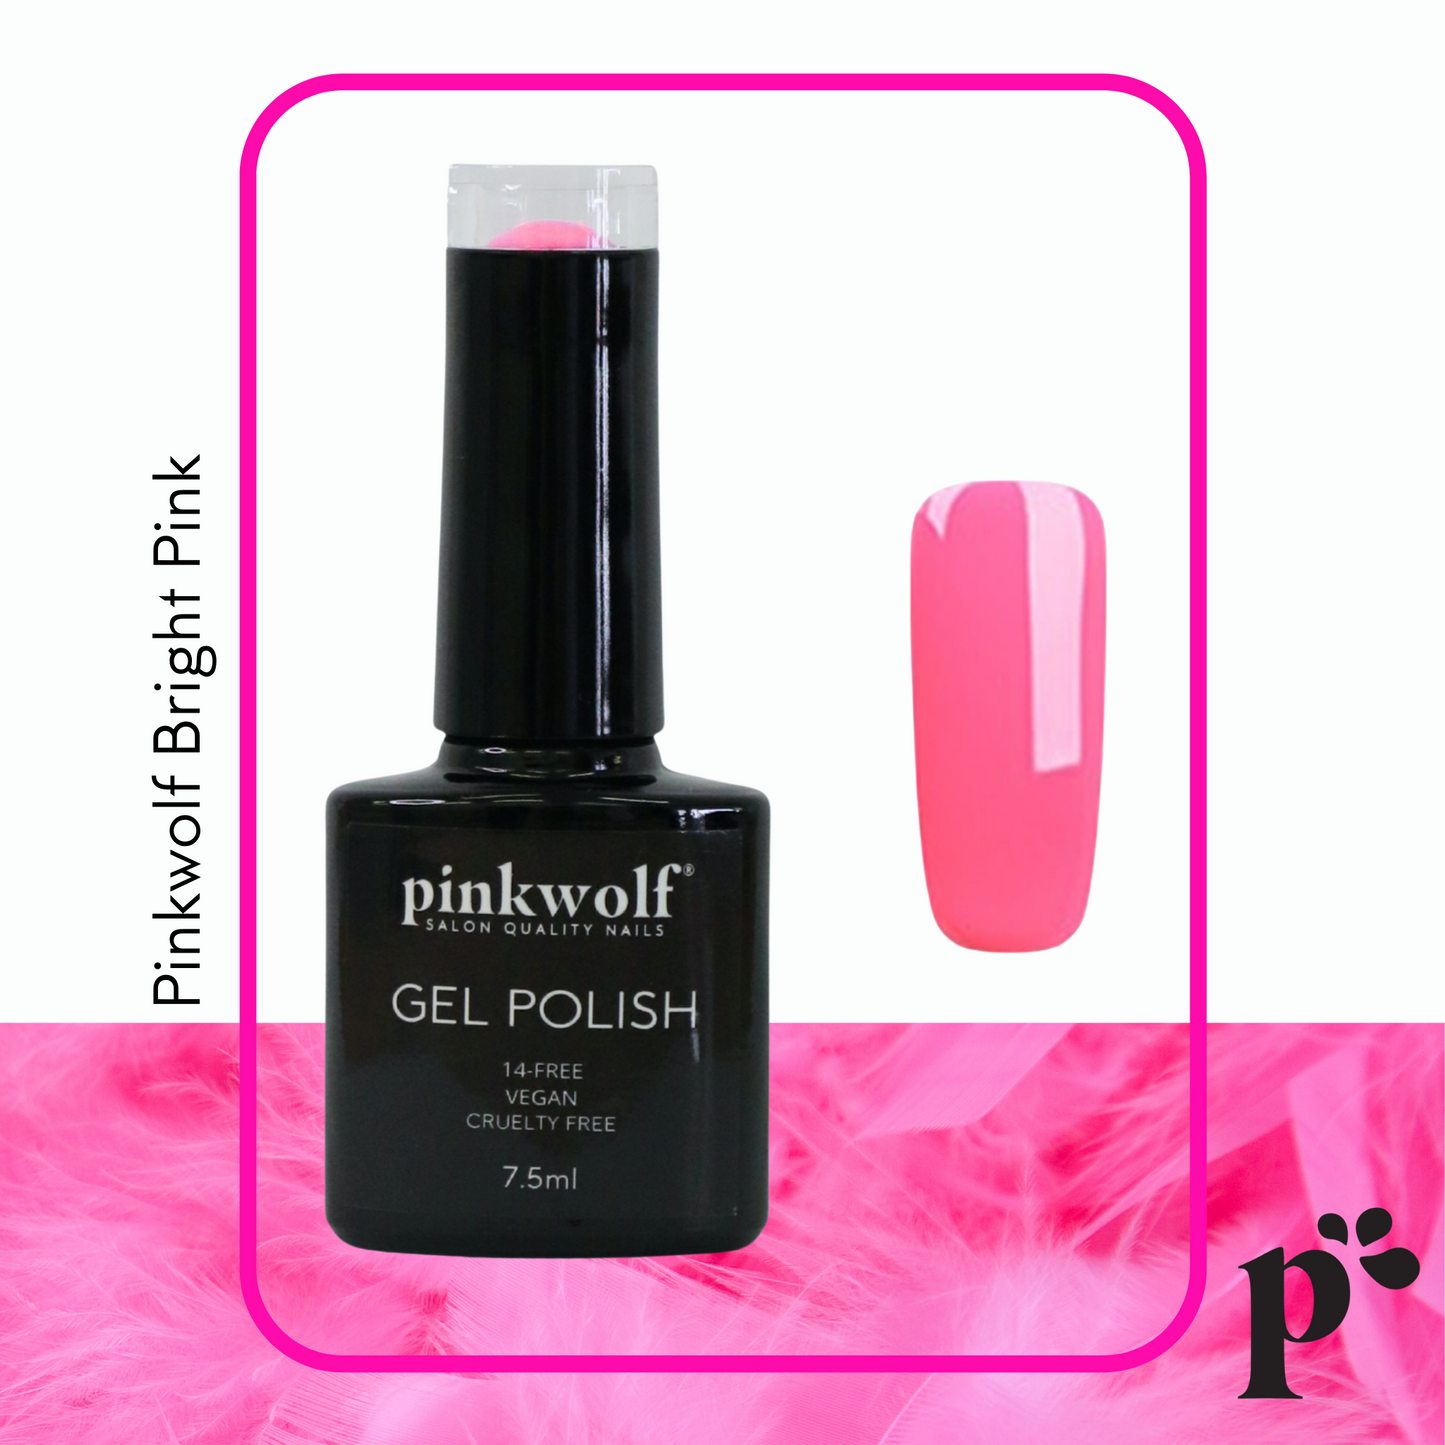 Pinkwolf gel nail polish 7.5ml bottle